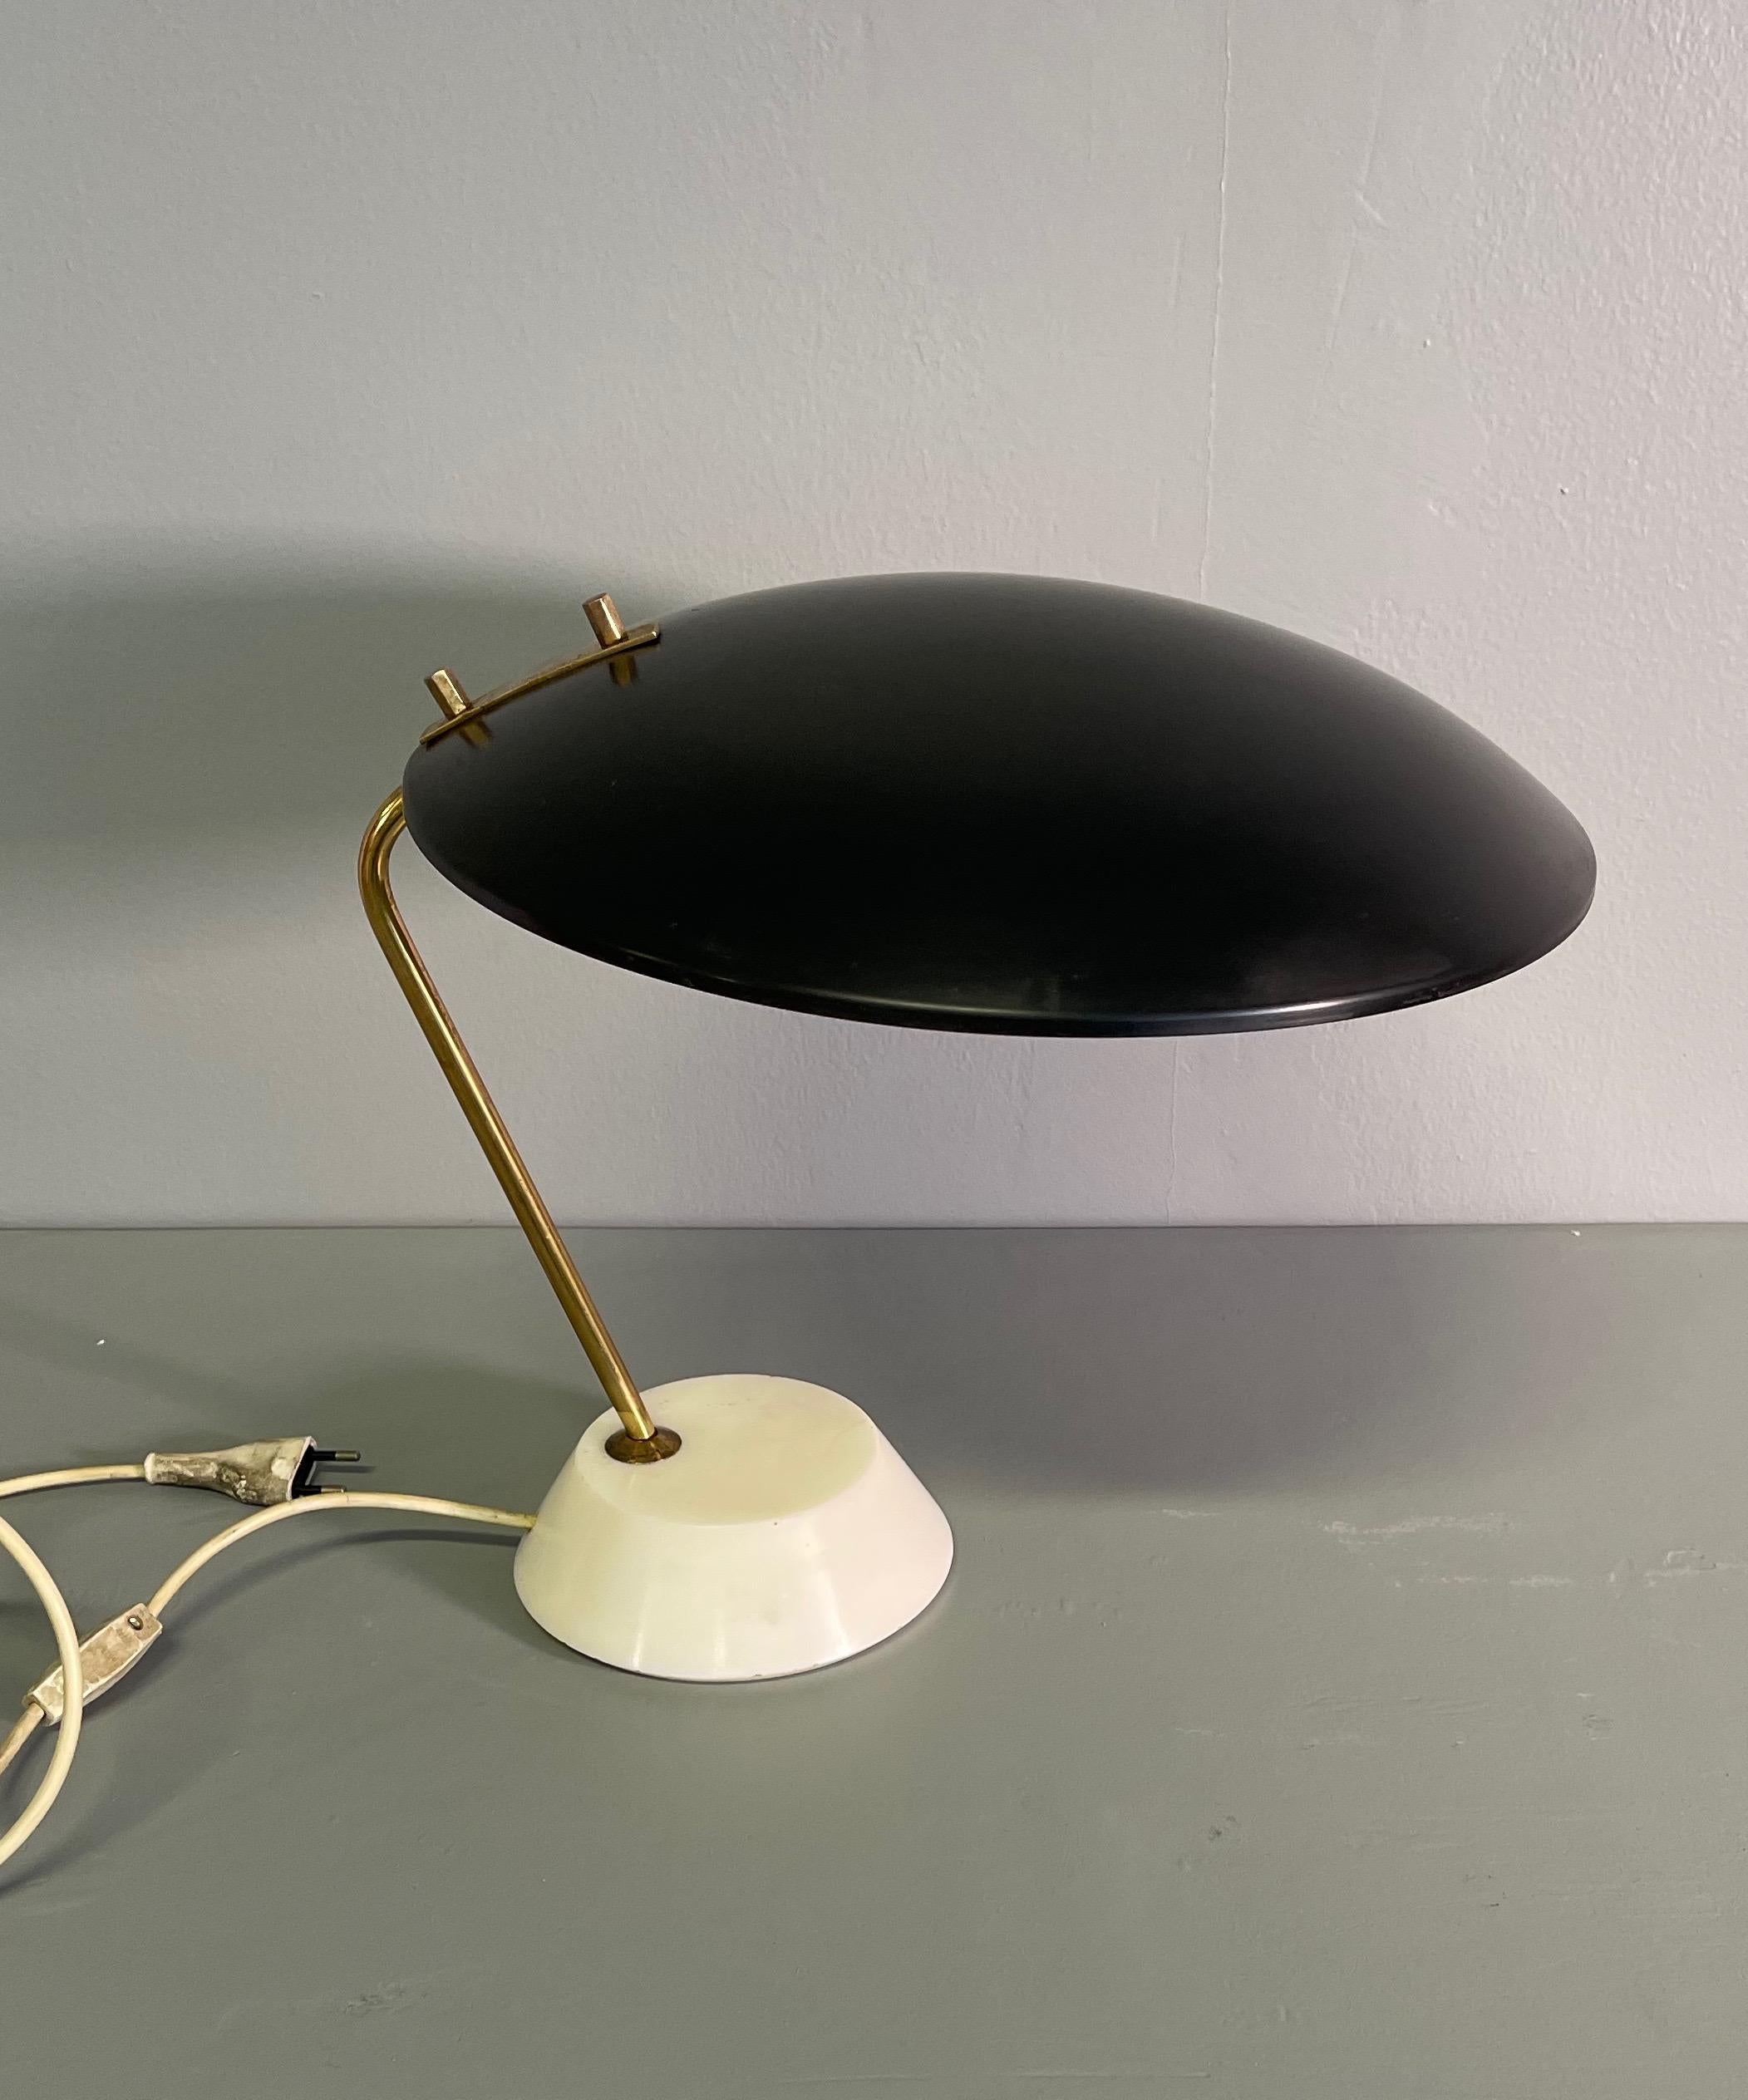 Rare Stilnovo Bruno Gatta, model 8023 desk lamp, in marble, brass and black lacquered metal, publisher's label, 1960s.